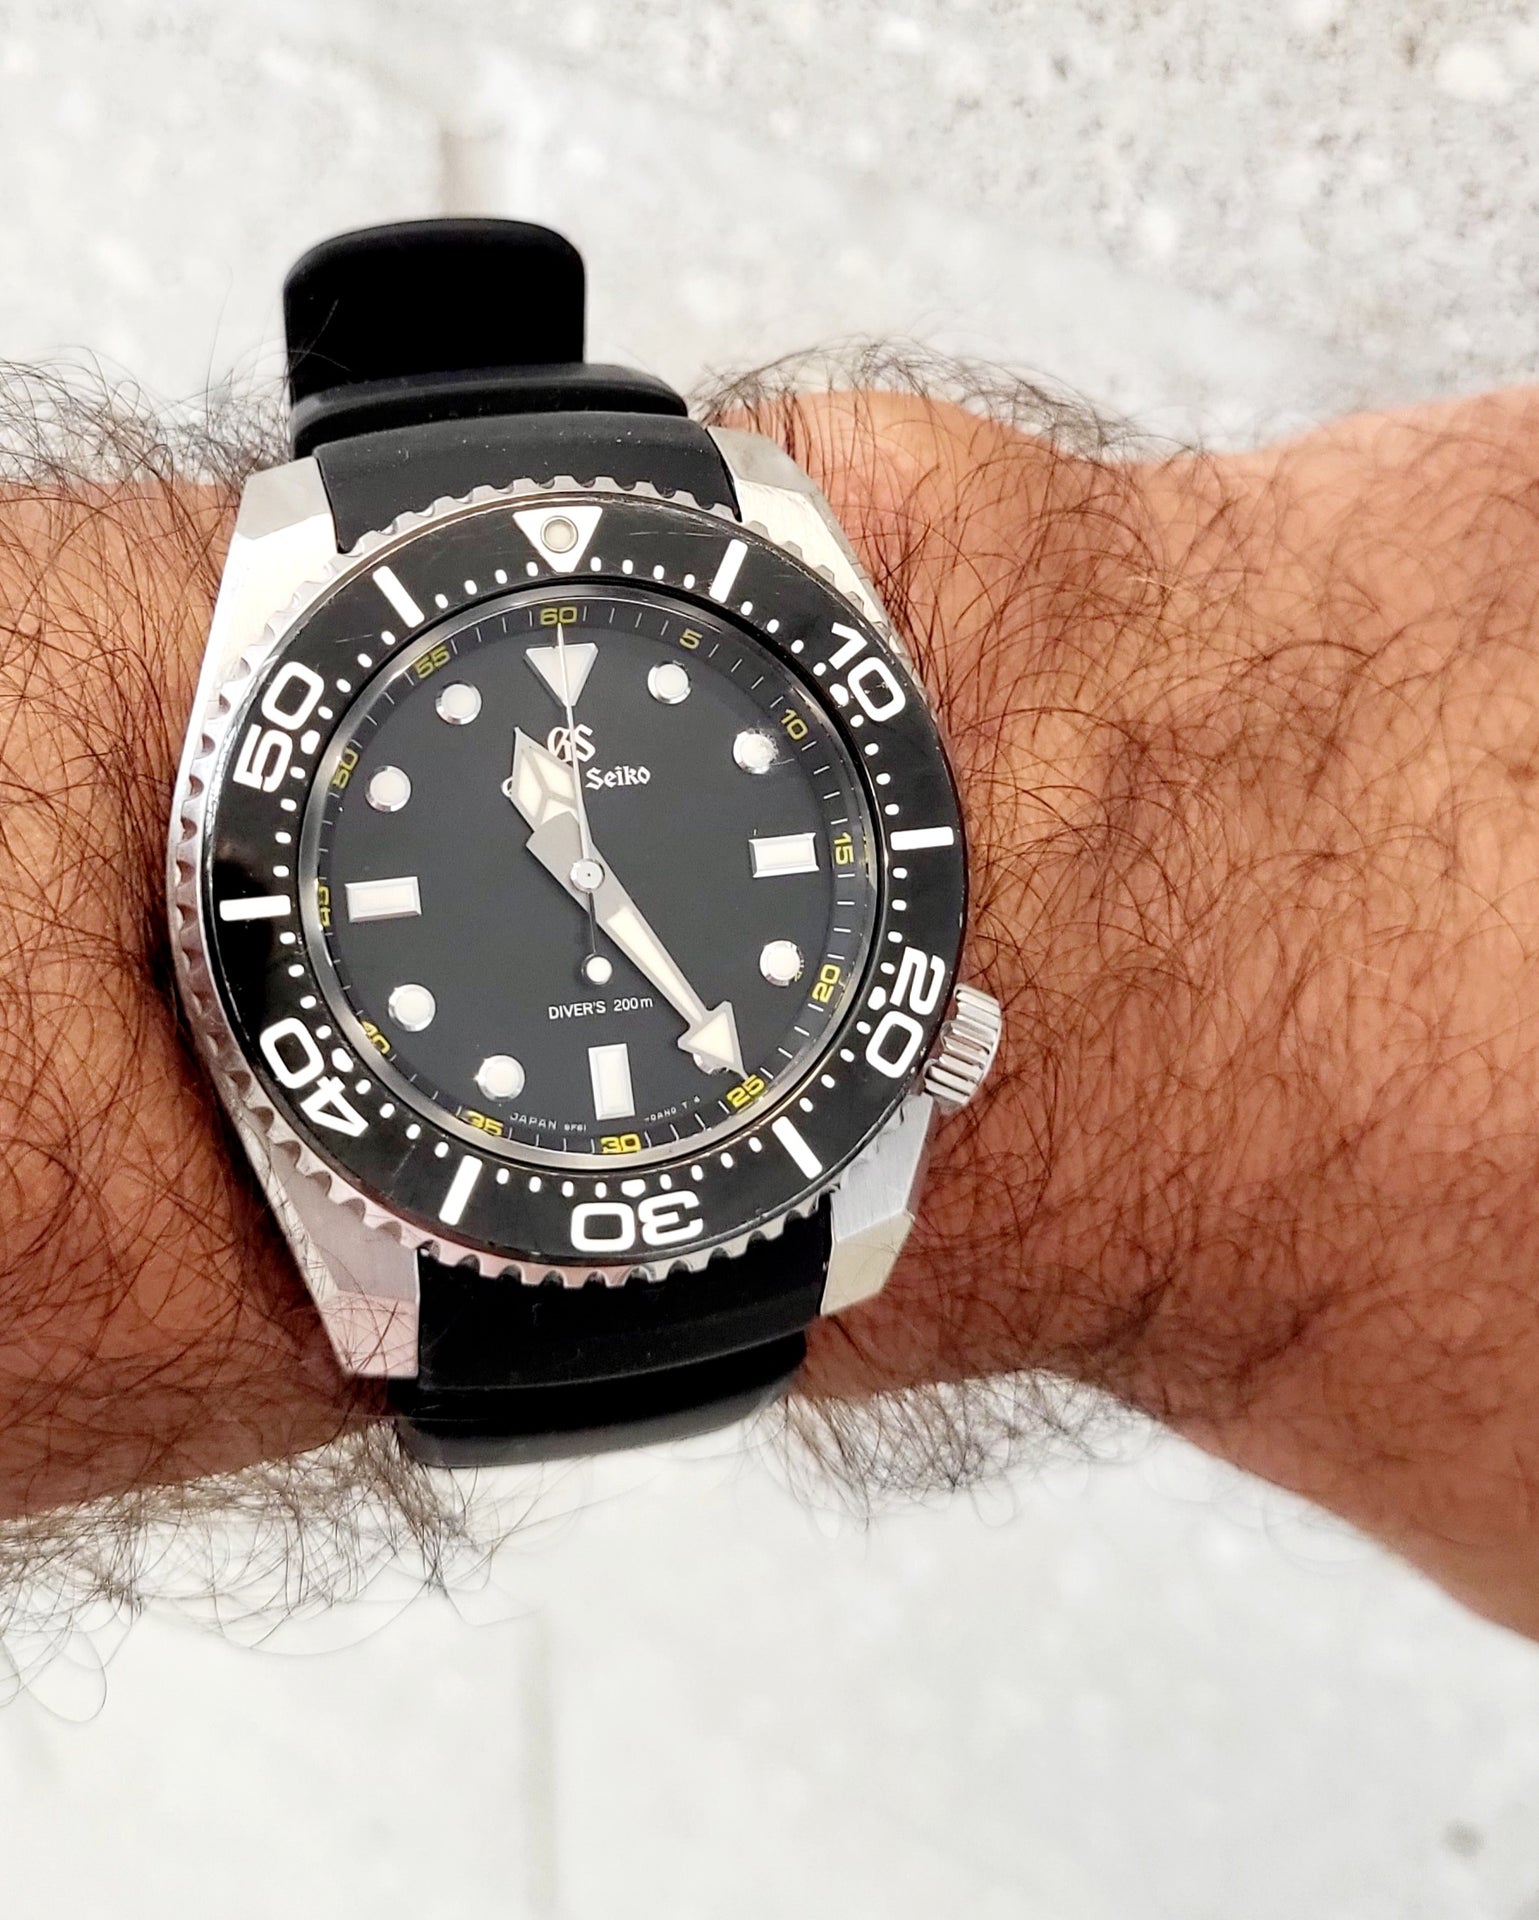 Grand Seiko Dive Watch | WatchUSeek Watch Forums